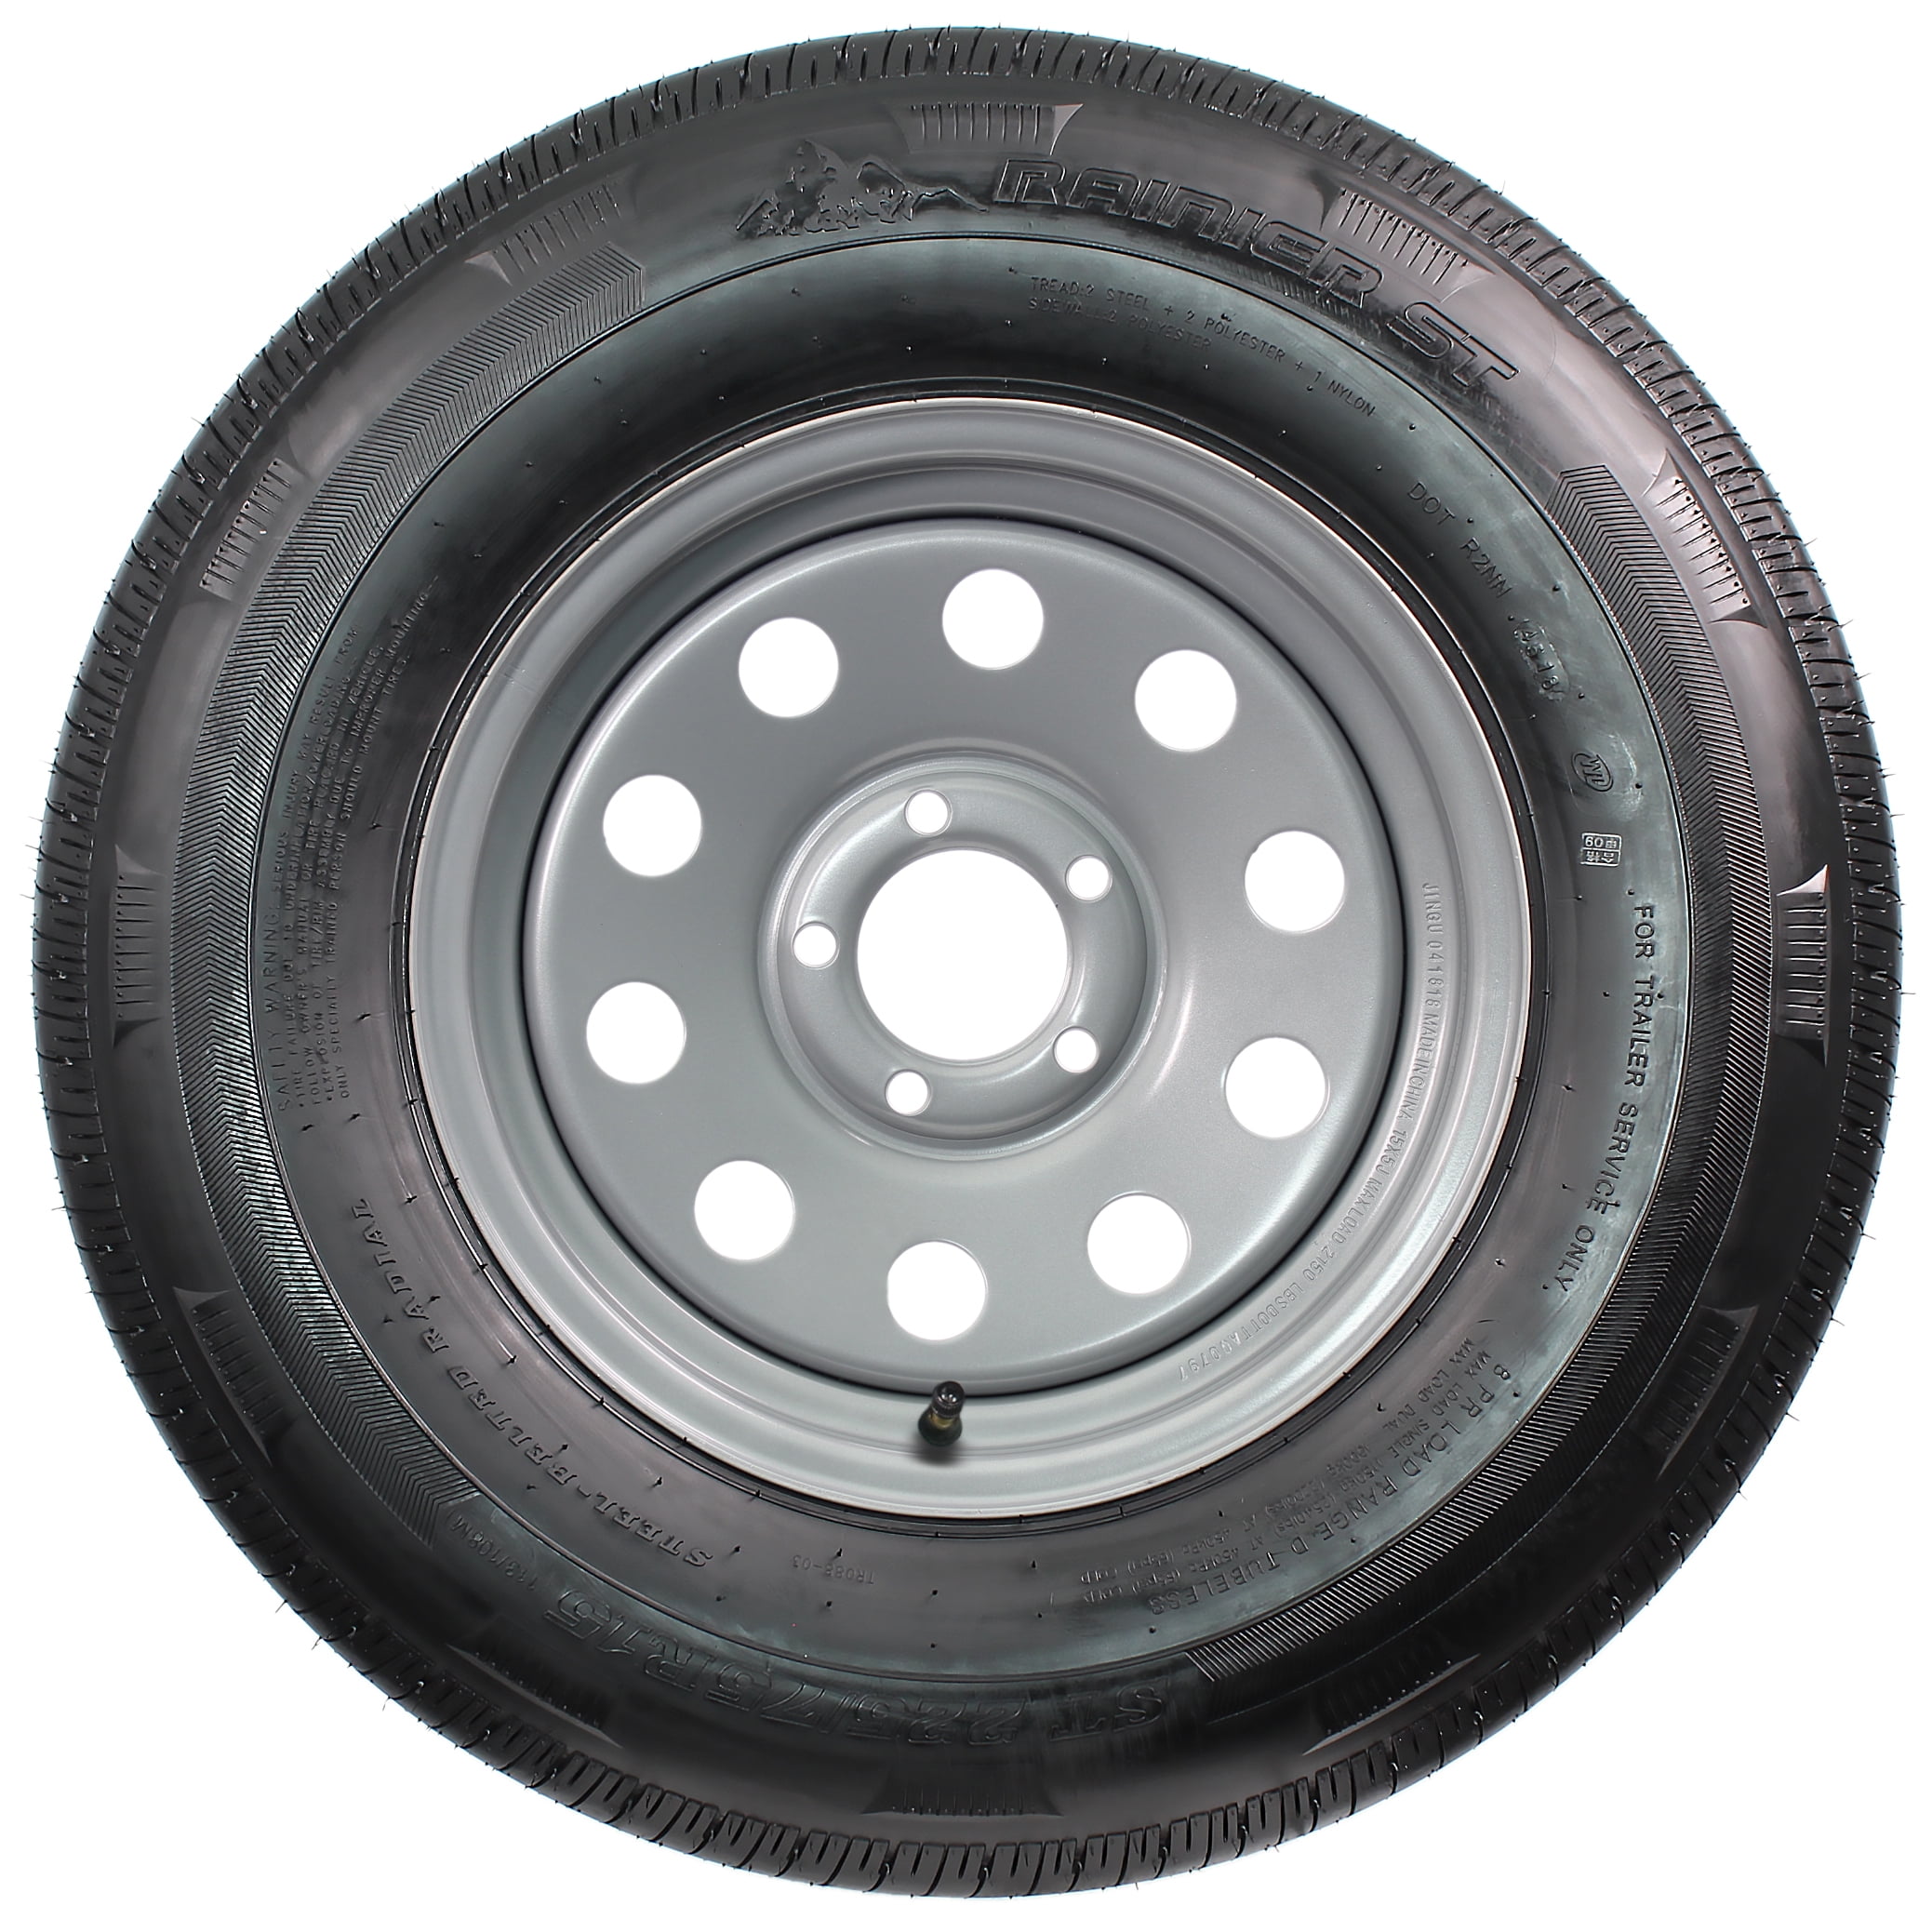 Load D 5 Lug Silver Modular Wheel Trailer Tire On Rim ST225/75D15 15 in 